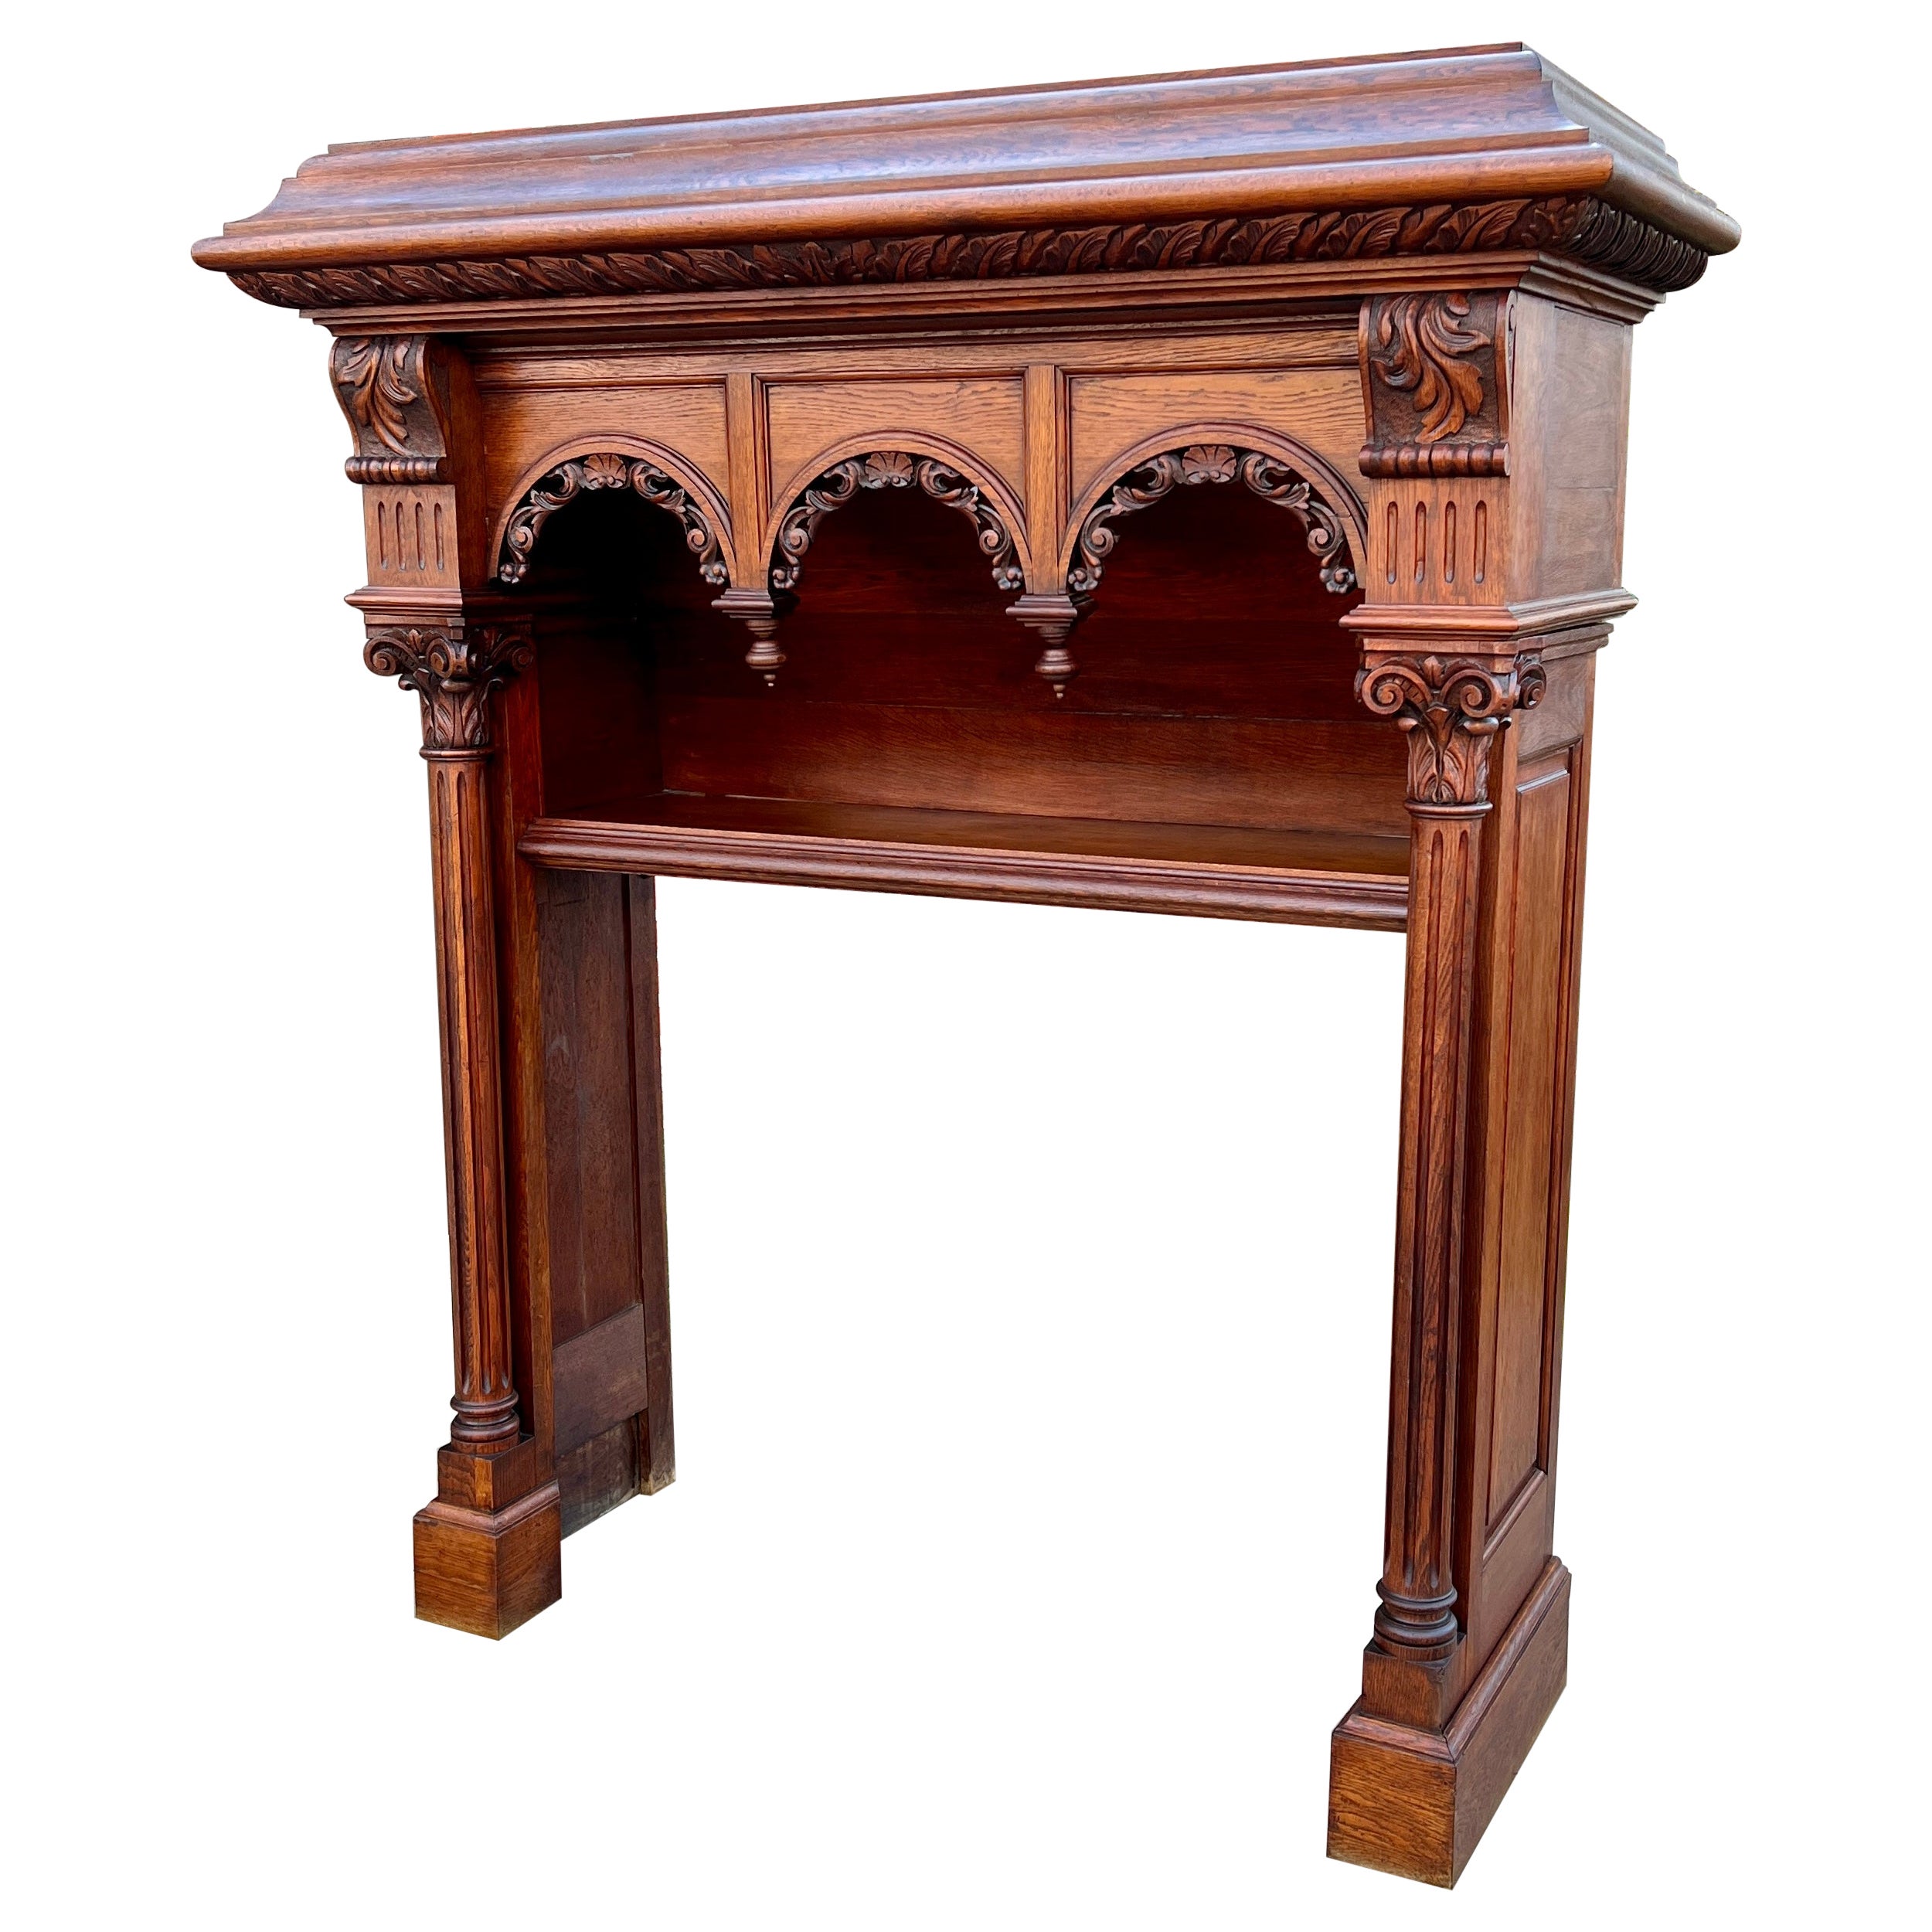 Antique French Fireplace Mantel Surround Renaissance Revival Carved Oak For Sale